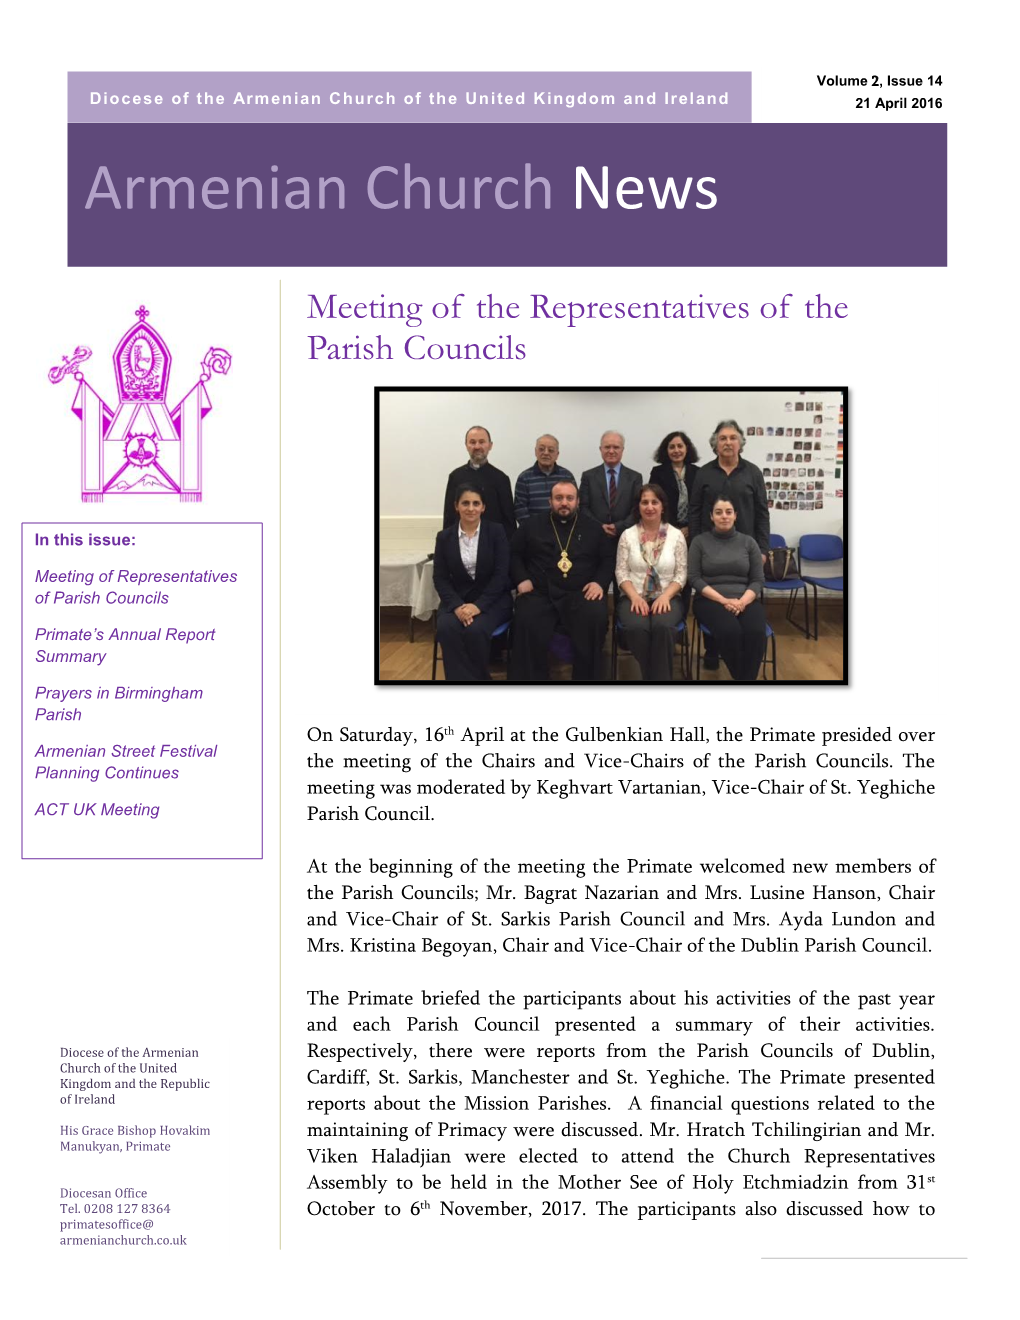 Armenian Church News